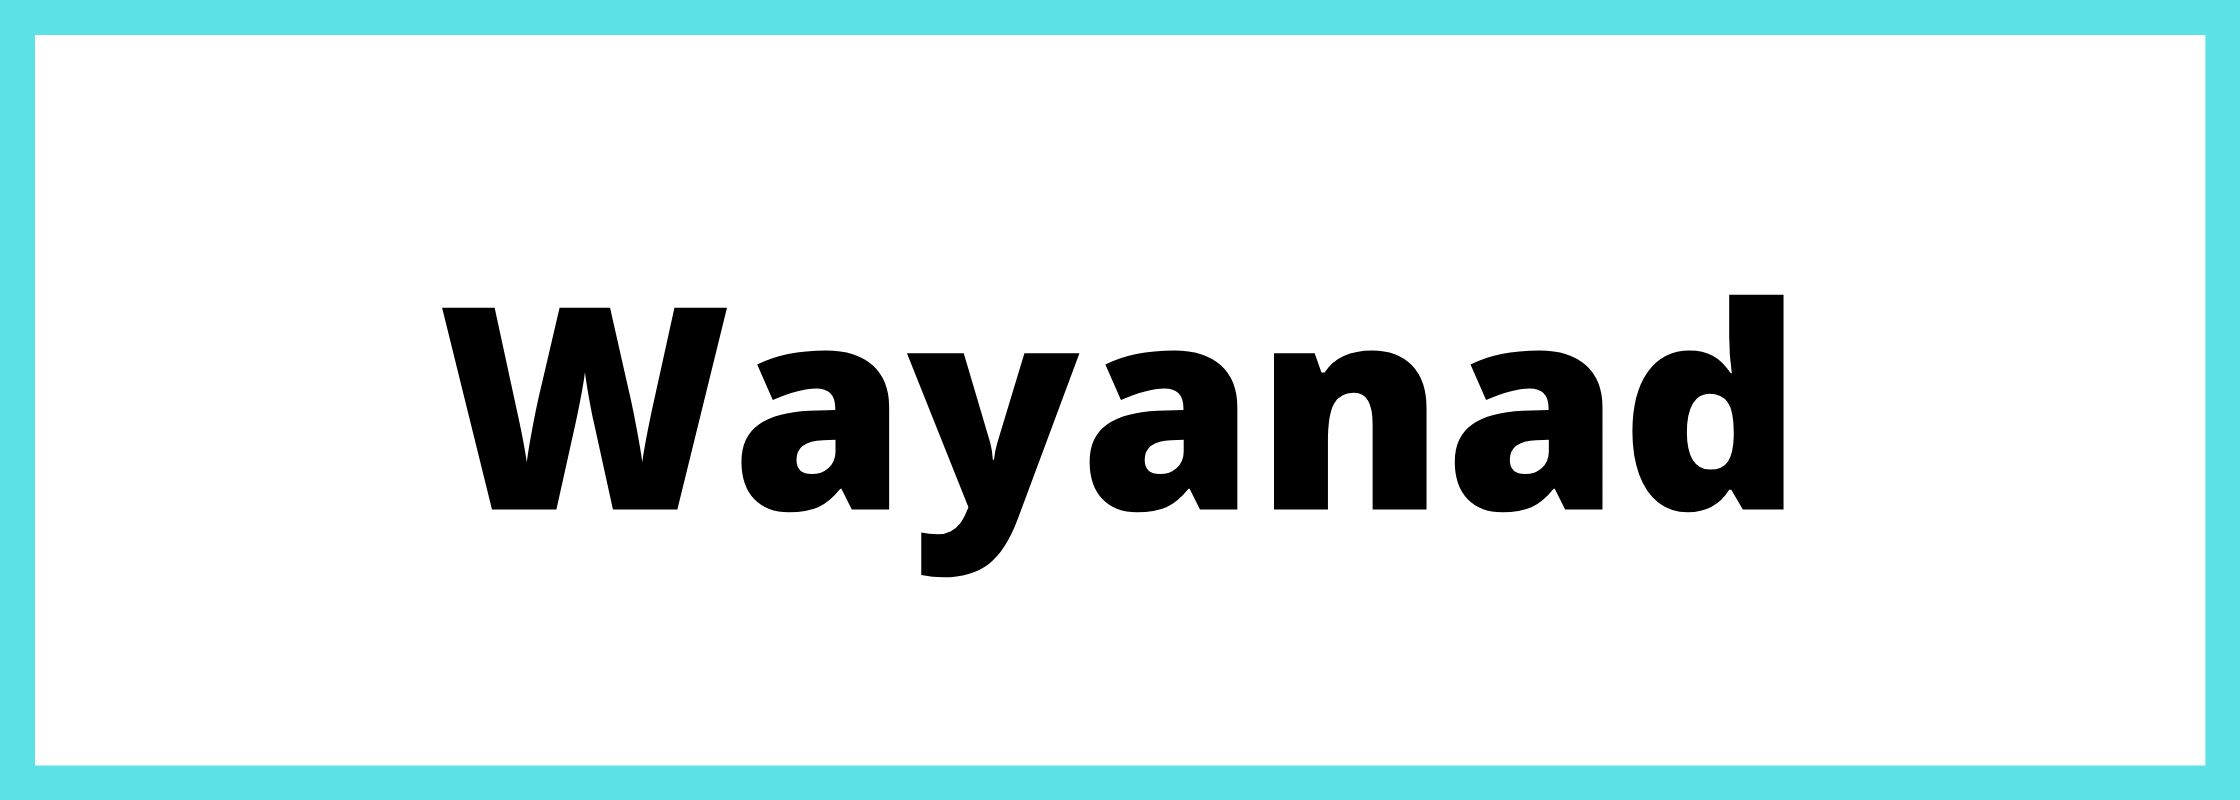 वायनाड-Wayanad-mandi-bhav